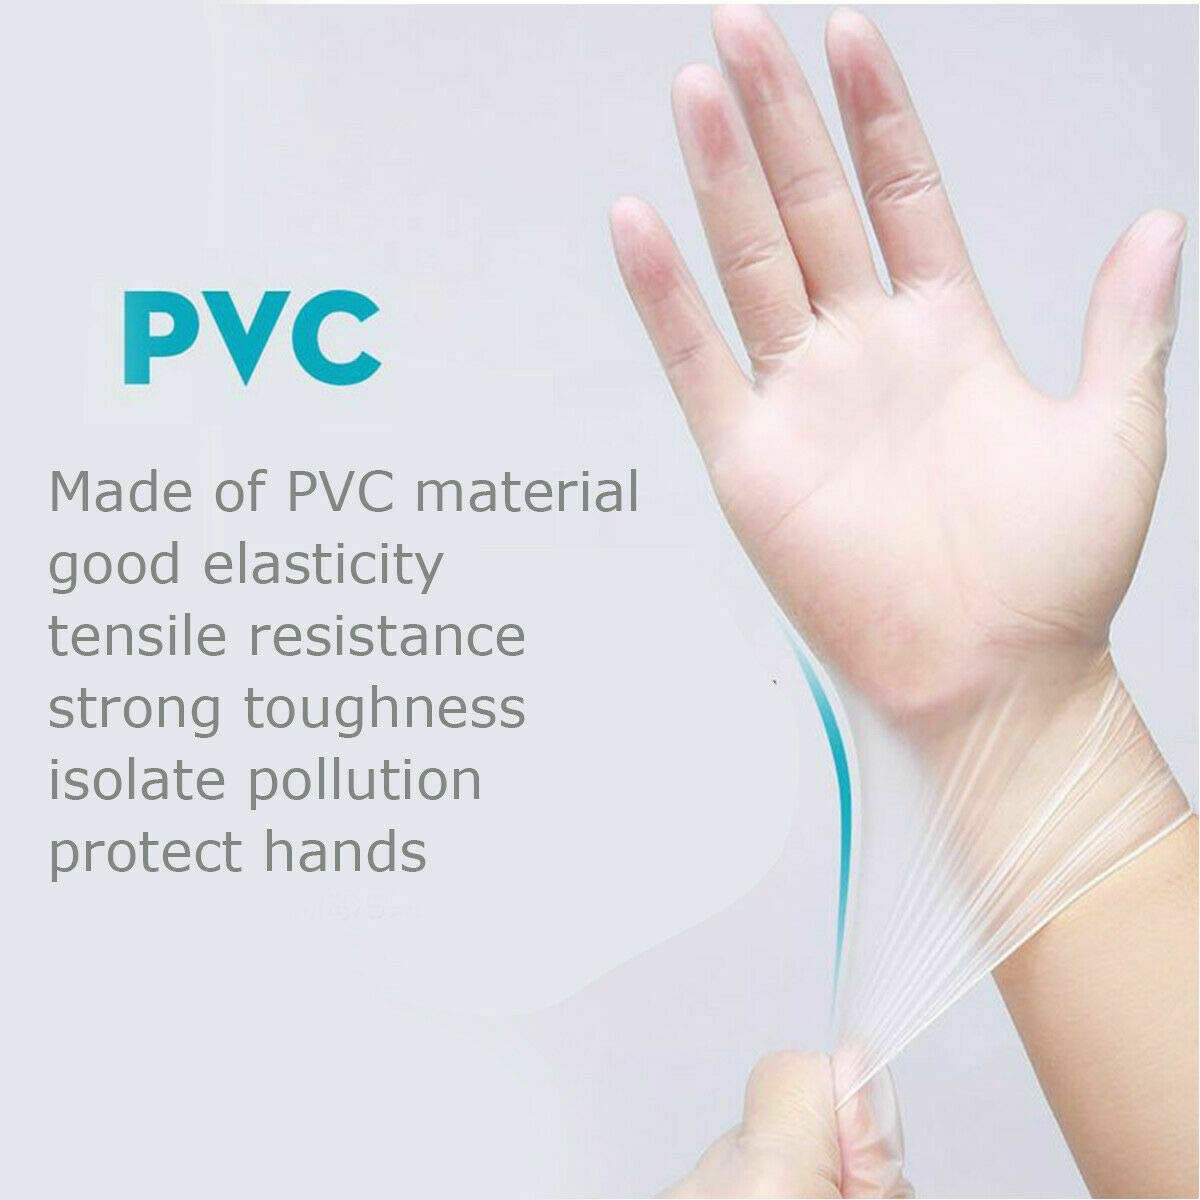 General Purpose Clear Vinyl Disposable Gloves Medium 50 pairs /100 pcs /Box